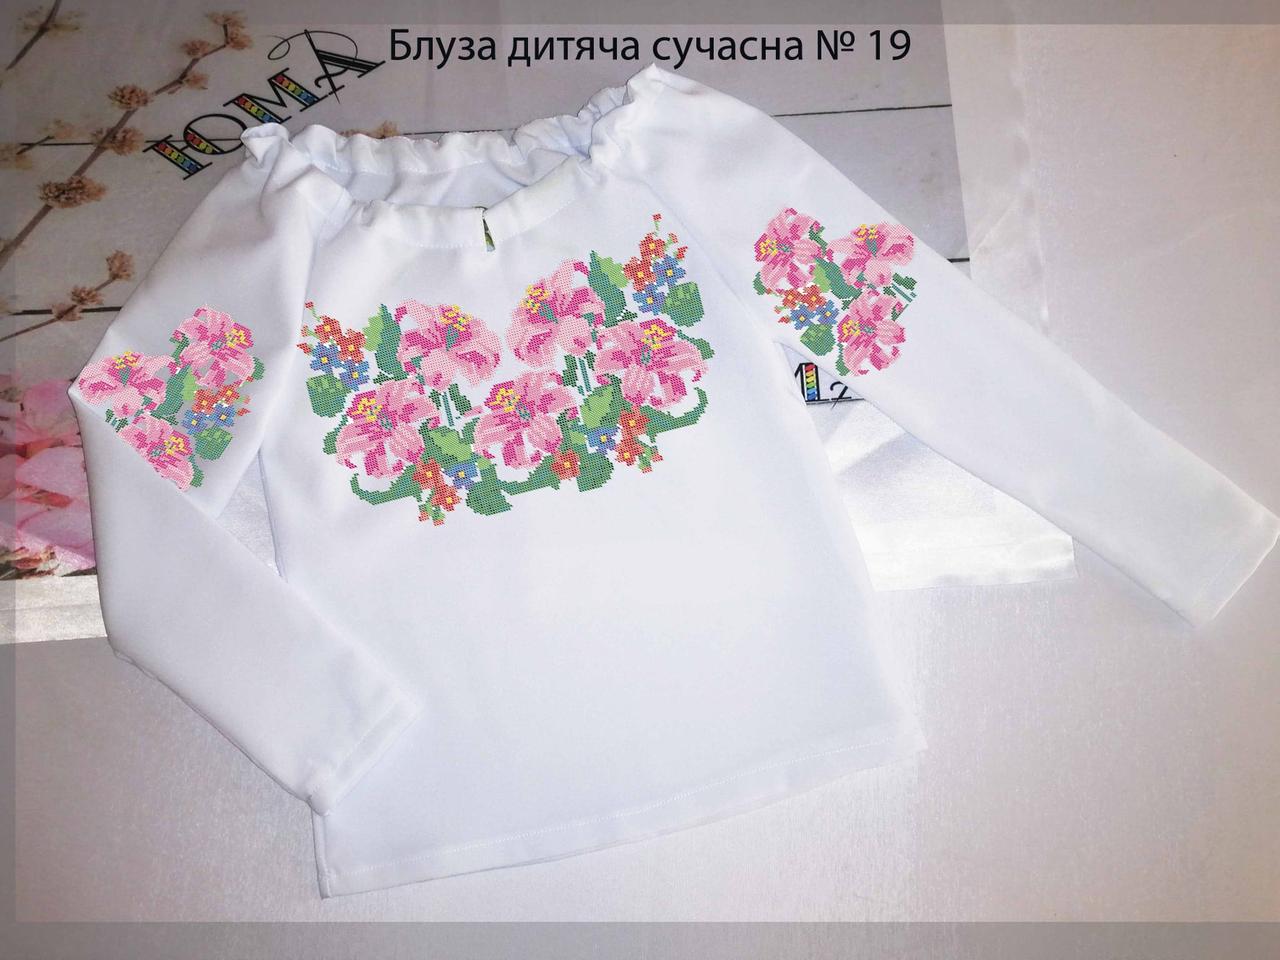 Пошита дитяча блузка для вишивки Сучасна БДС-19